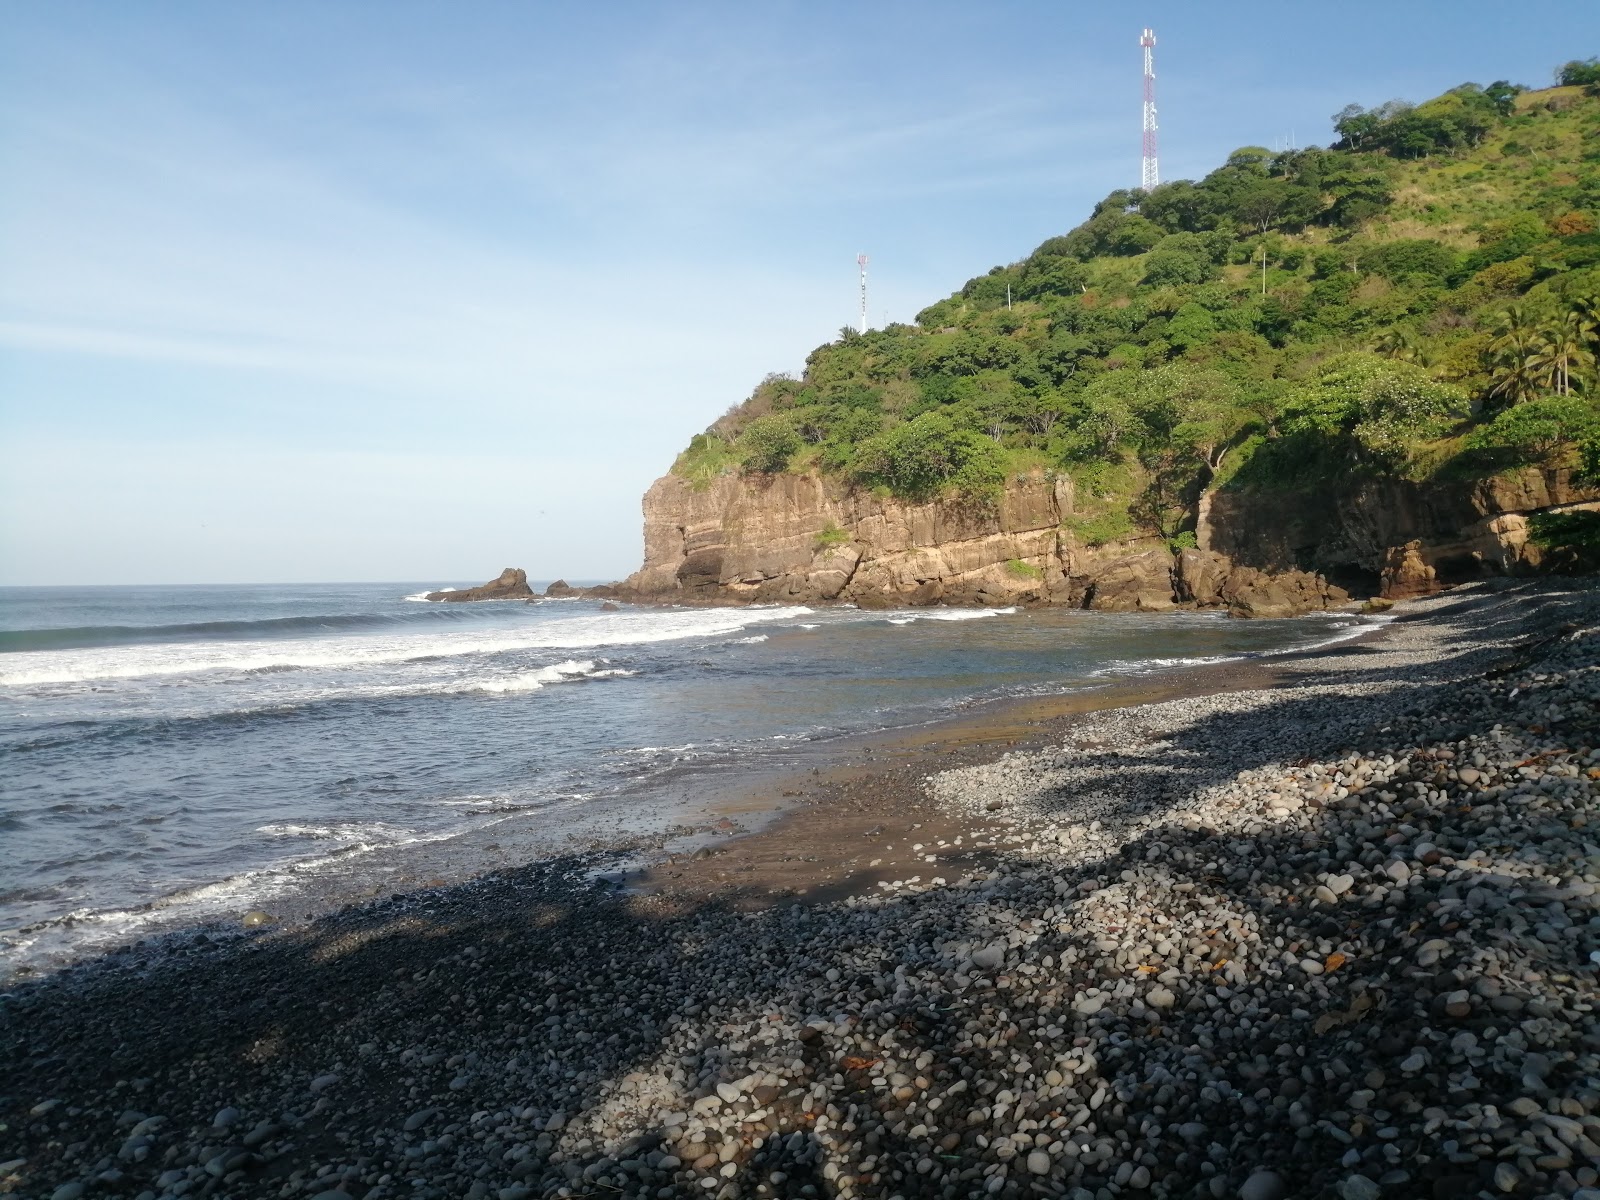 Foto von La Perla beach mit grauer kies Oberfläche